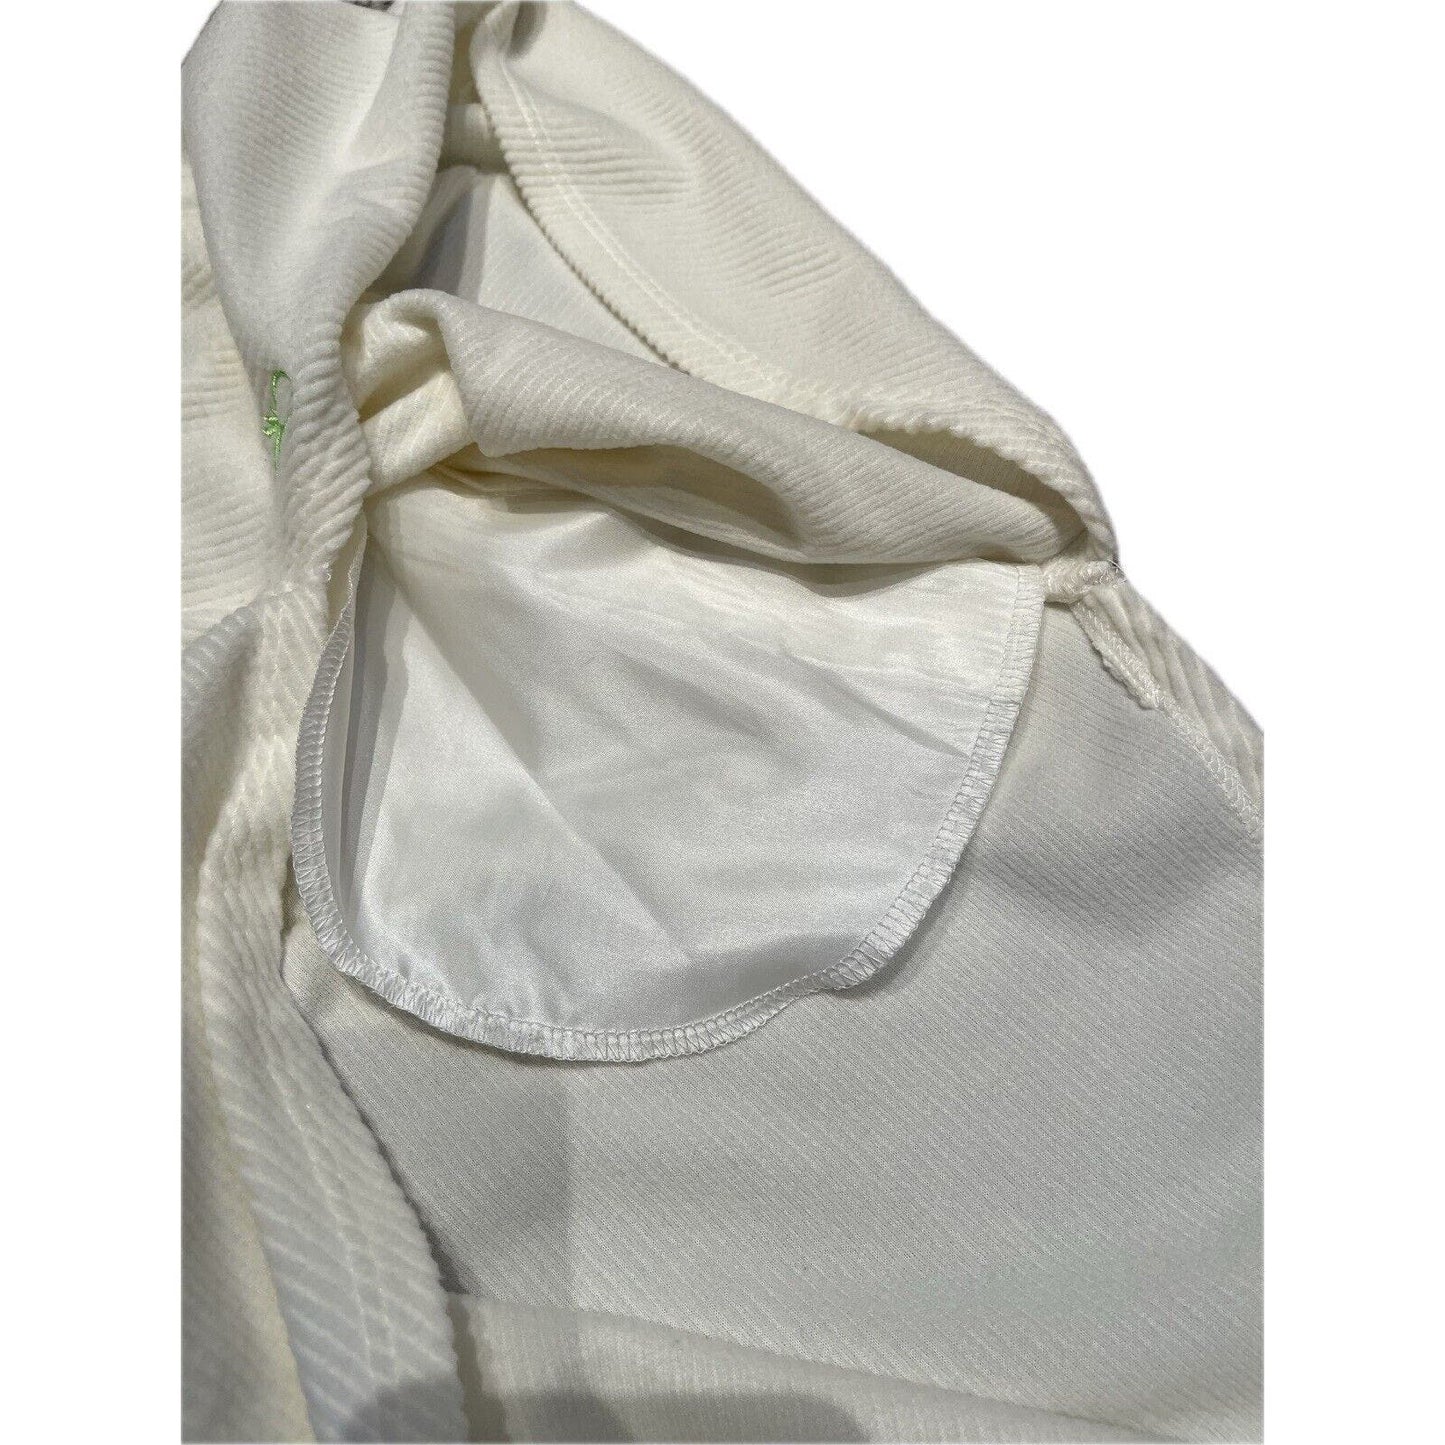 NWT Dudley Stephens Sidney Summer Dress Ribbed Fleece White Size Medium (6-8)